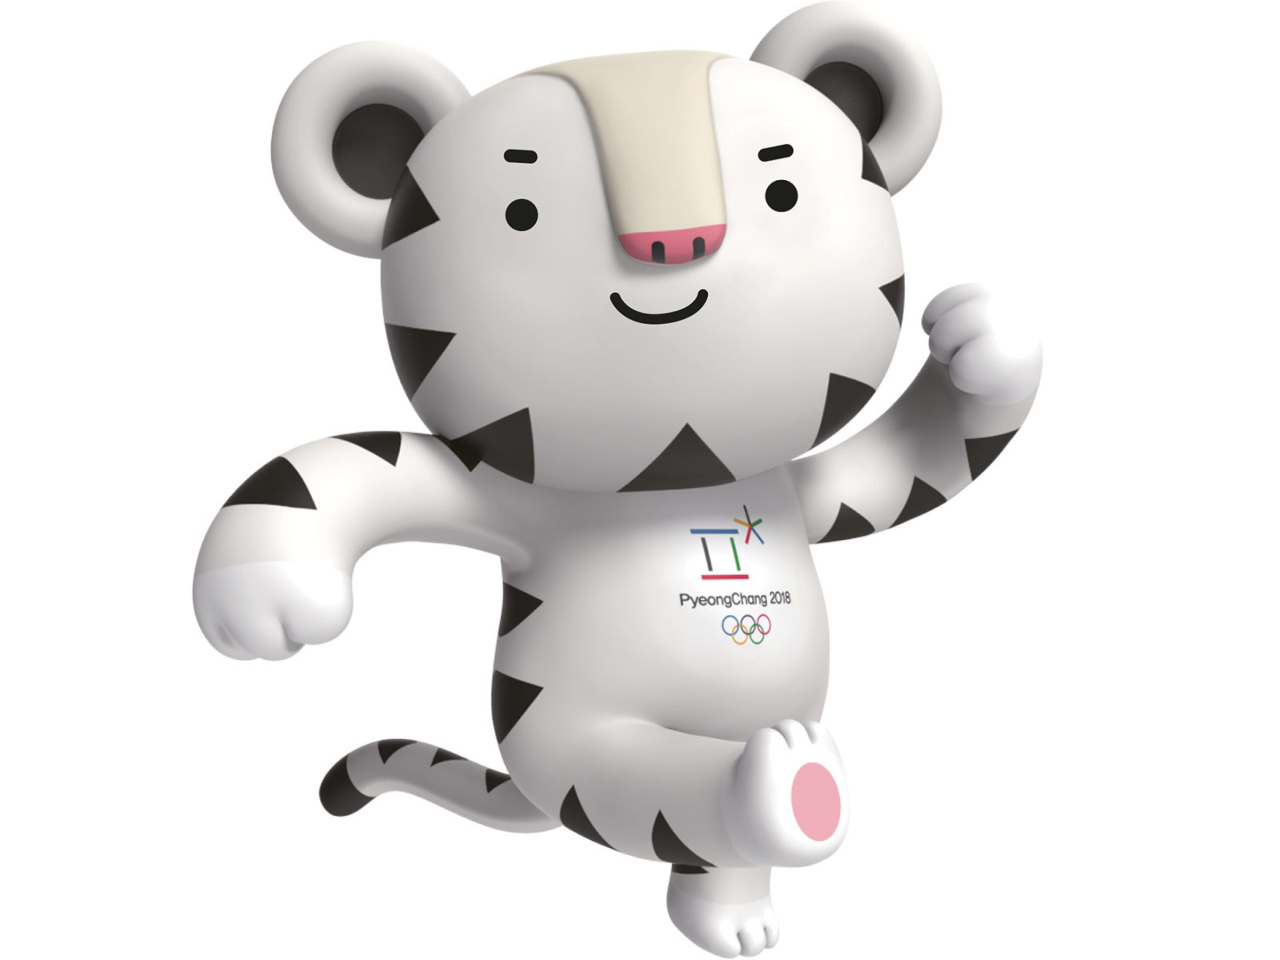 Das 2018 Winter Olympics Pyeongchang Mascot Wallpaper 1280x960